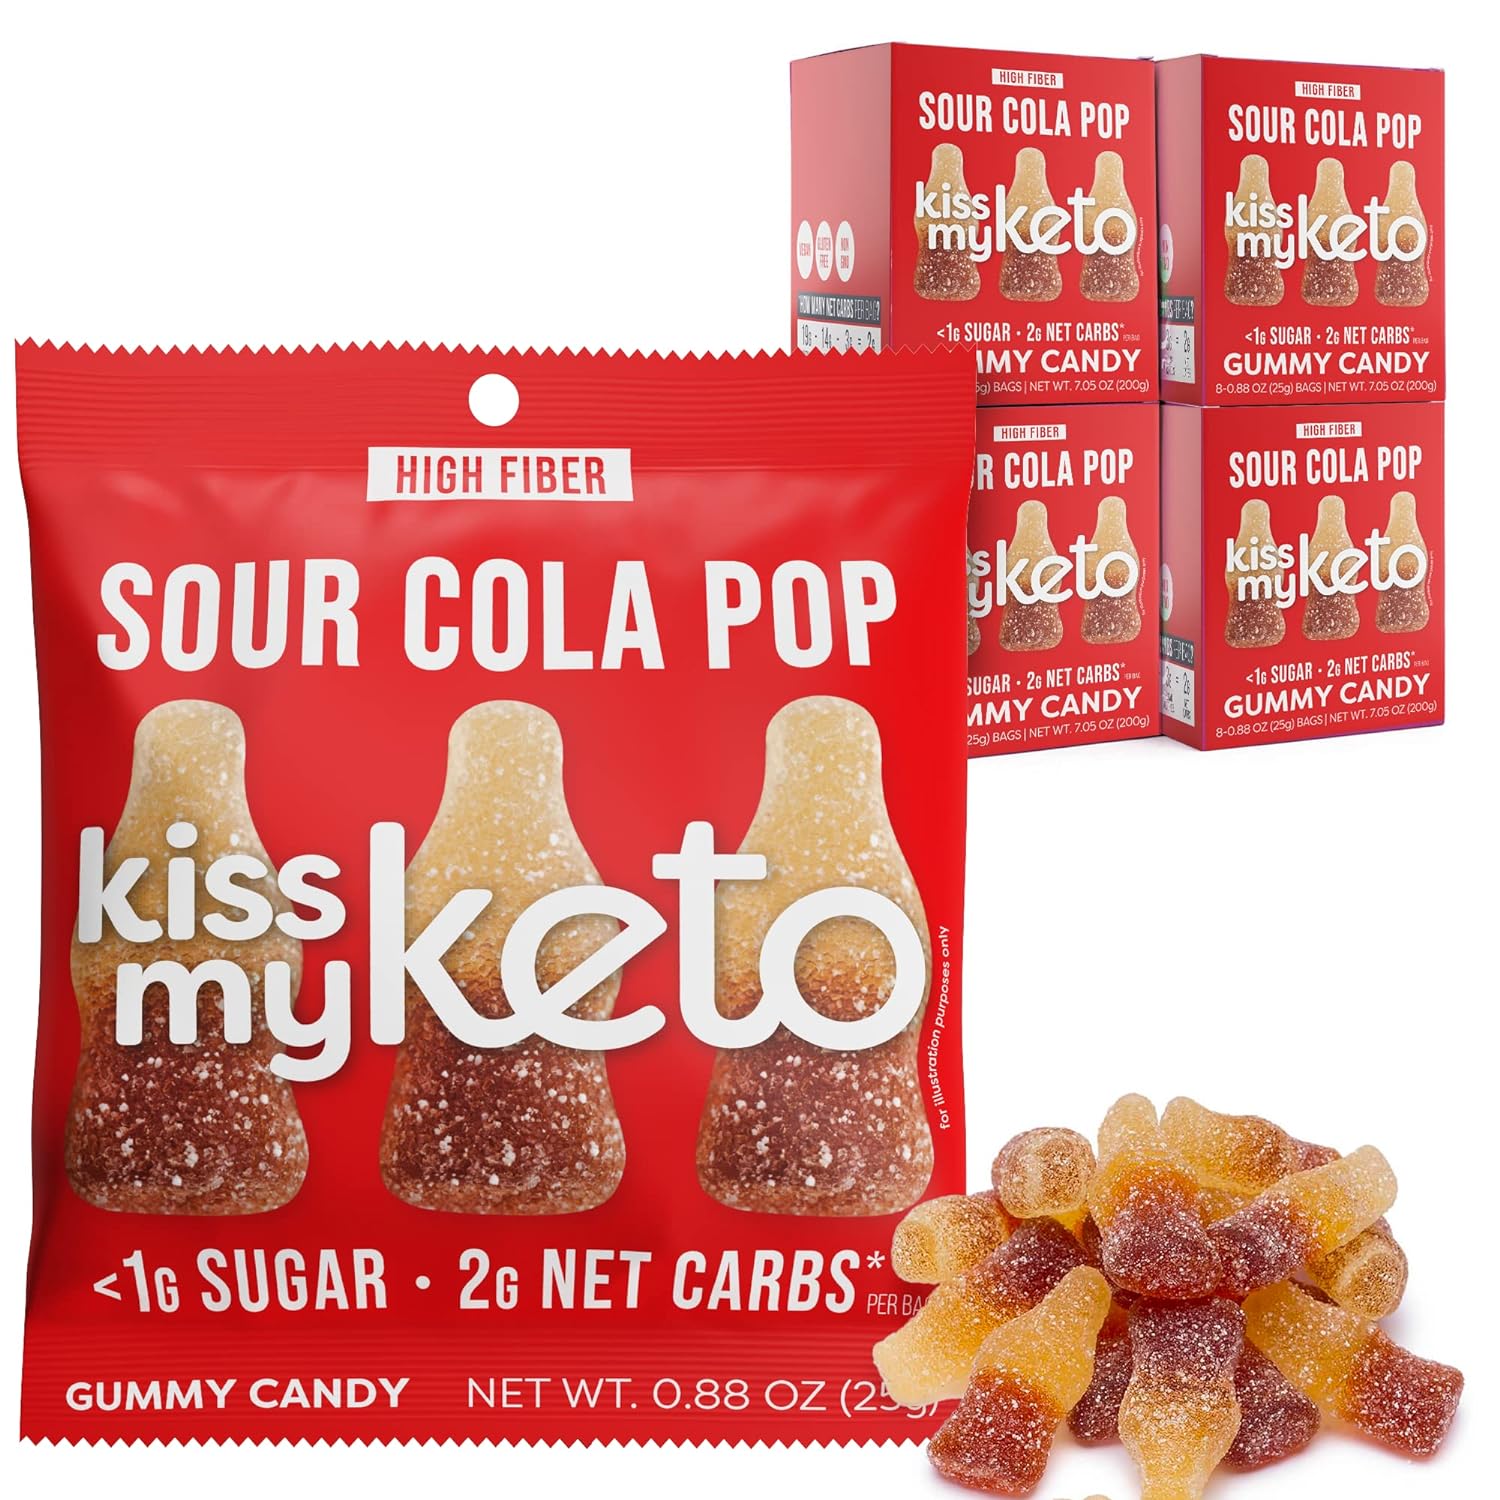 Kiss my keto Gummy Candy Sour Cola Pop Vegan less than 1g sugar 25g